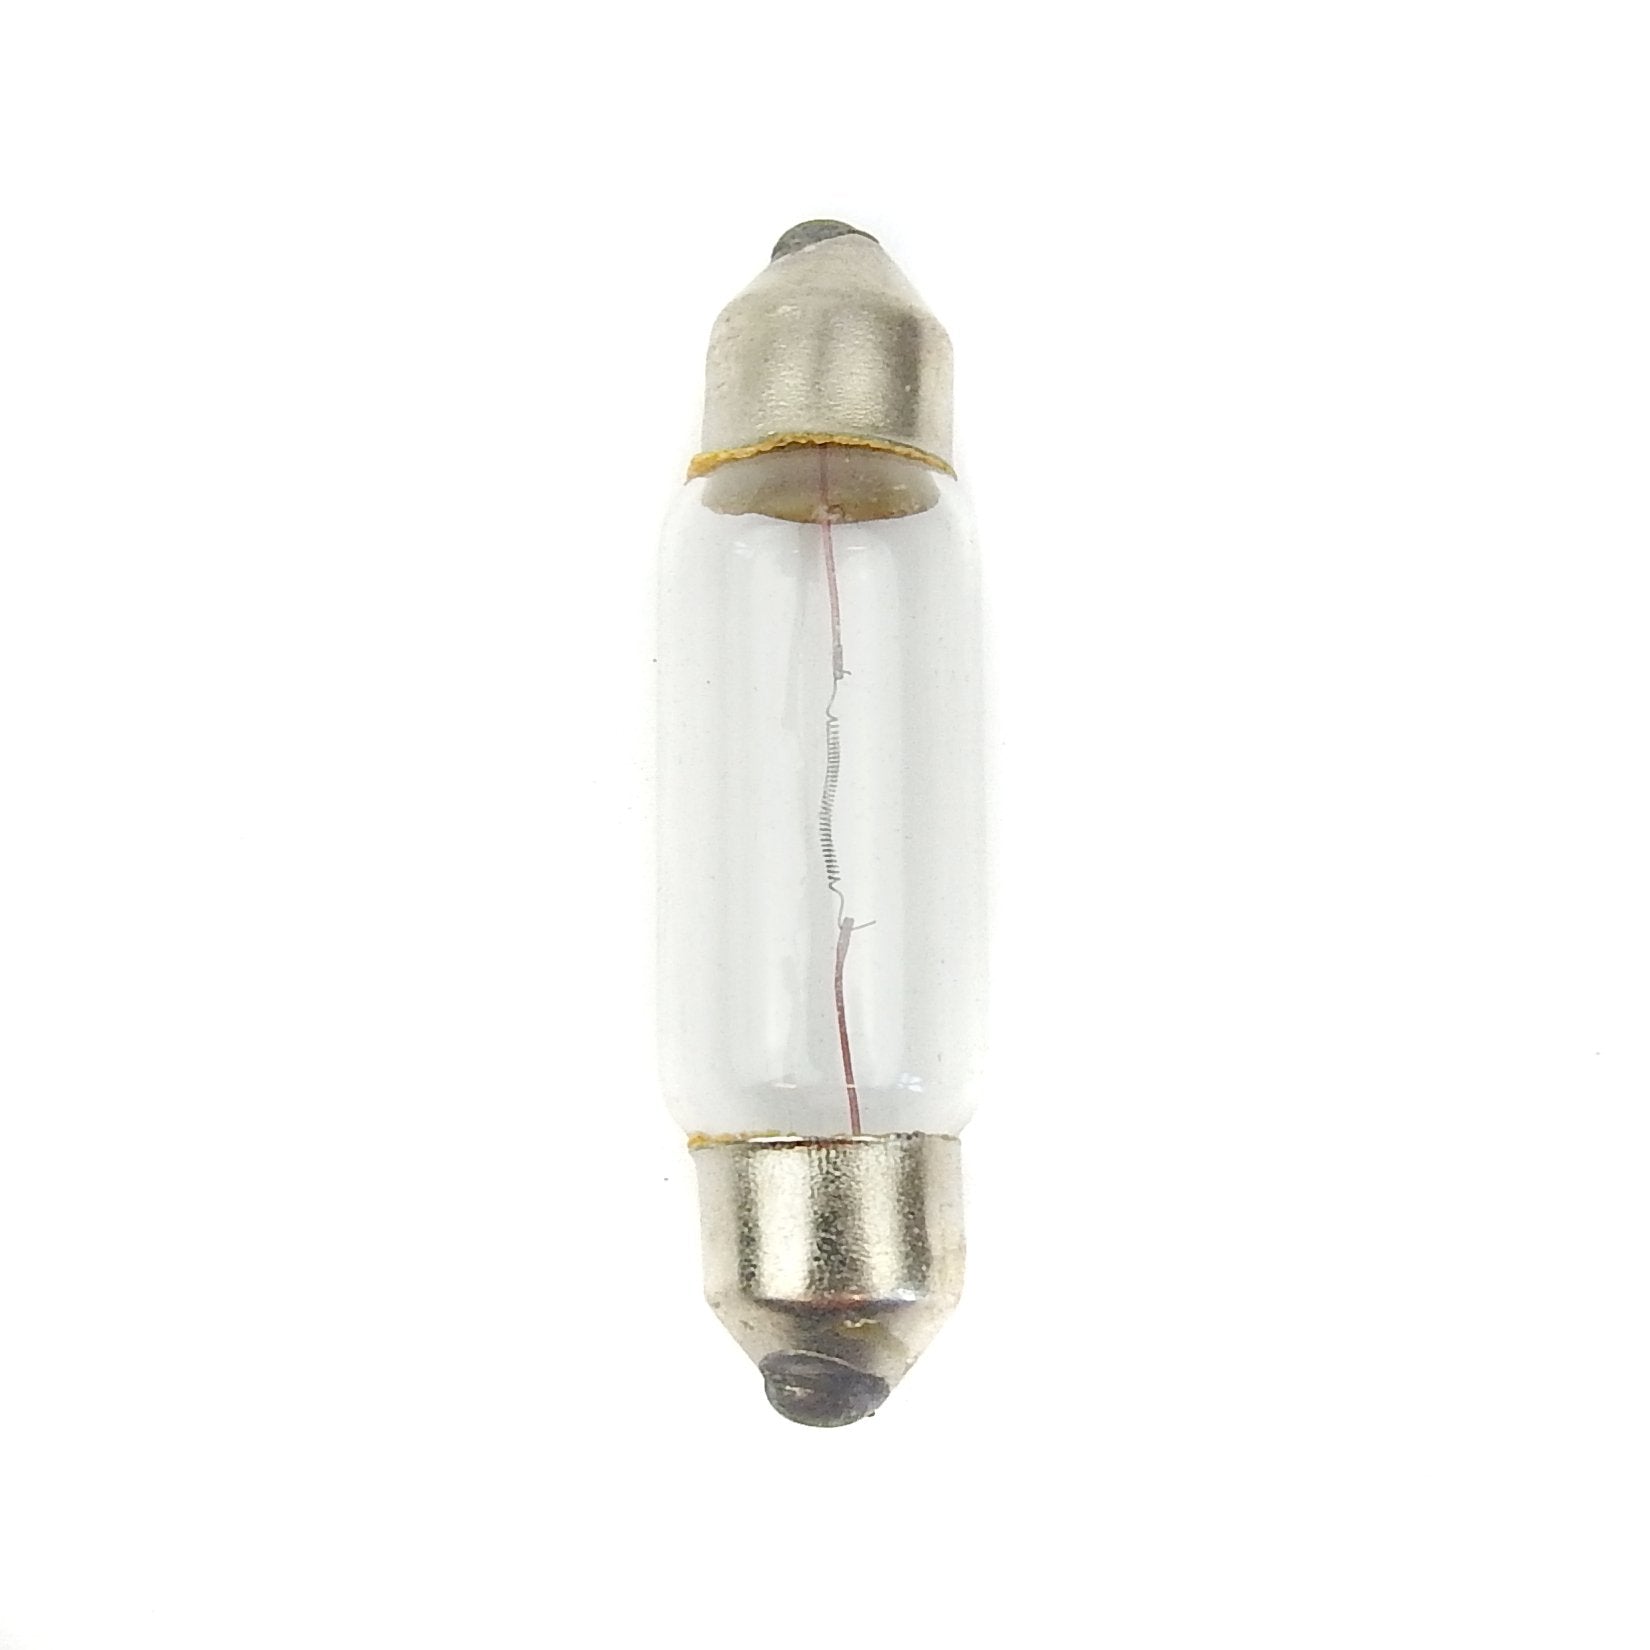 Festoon Bulb 6V 10W - 44mm x 10mm